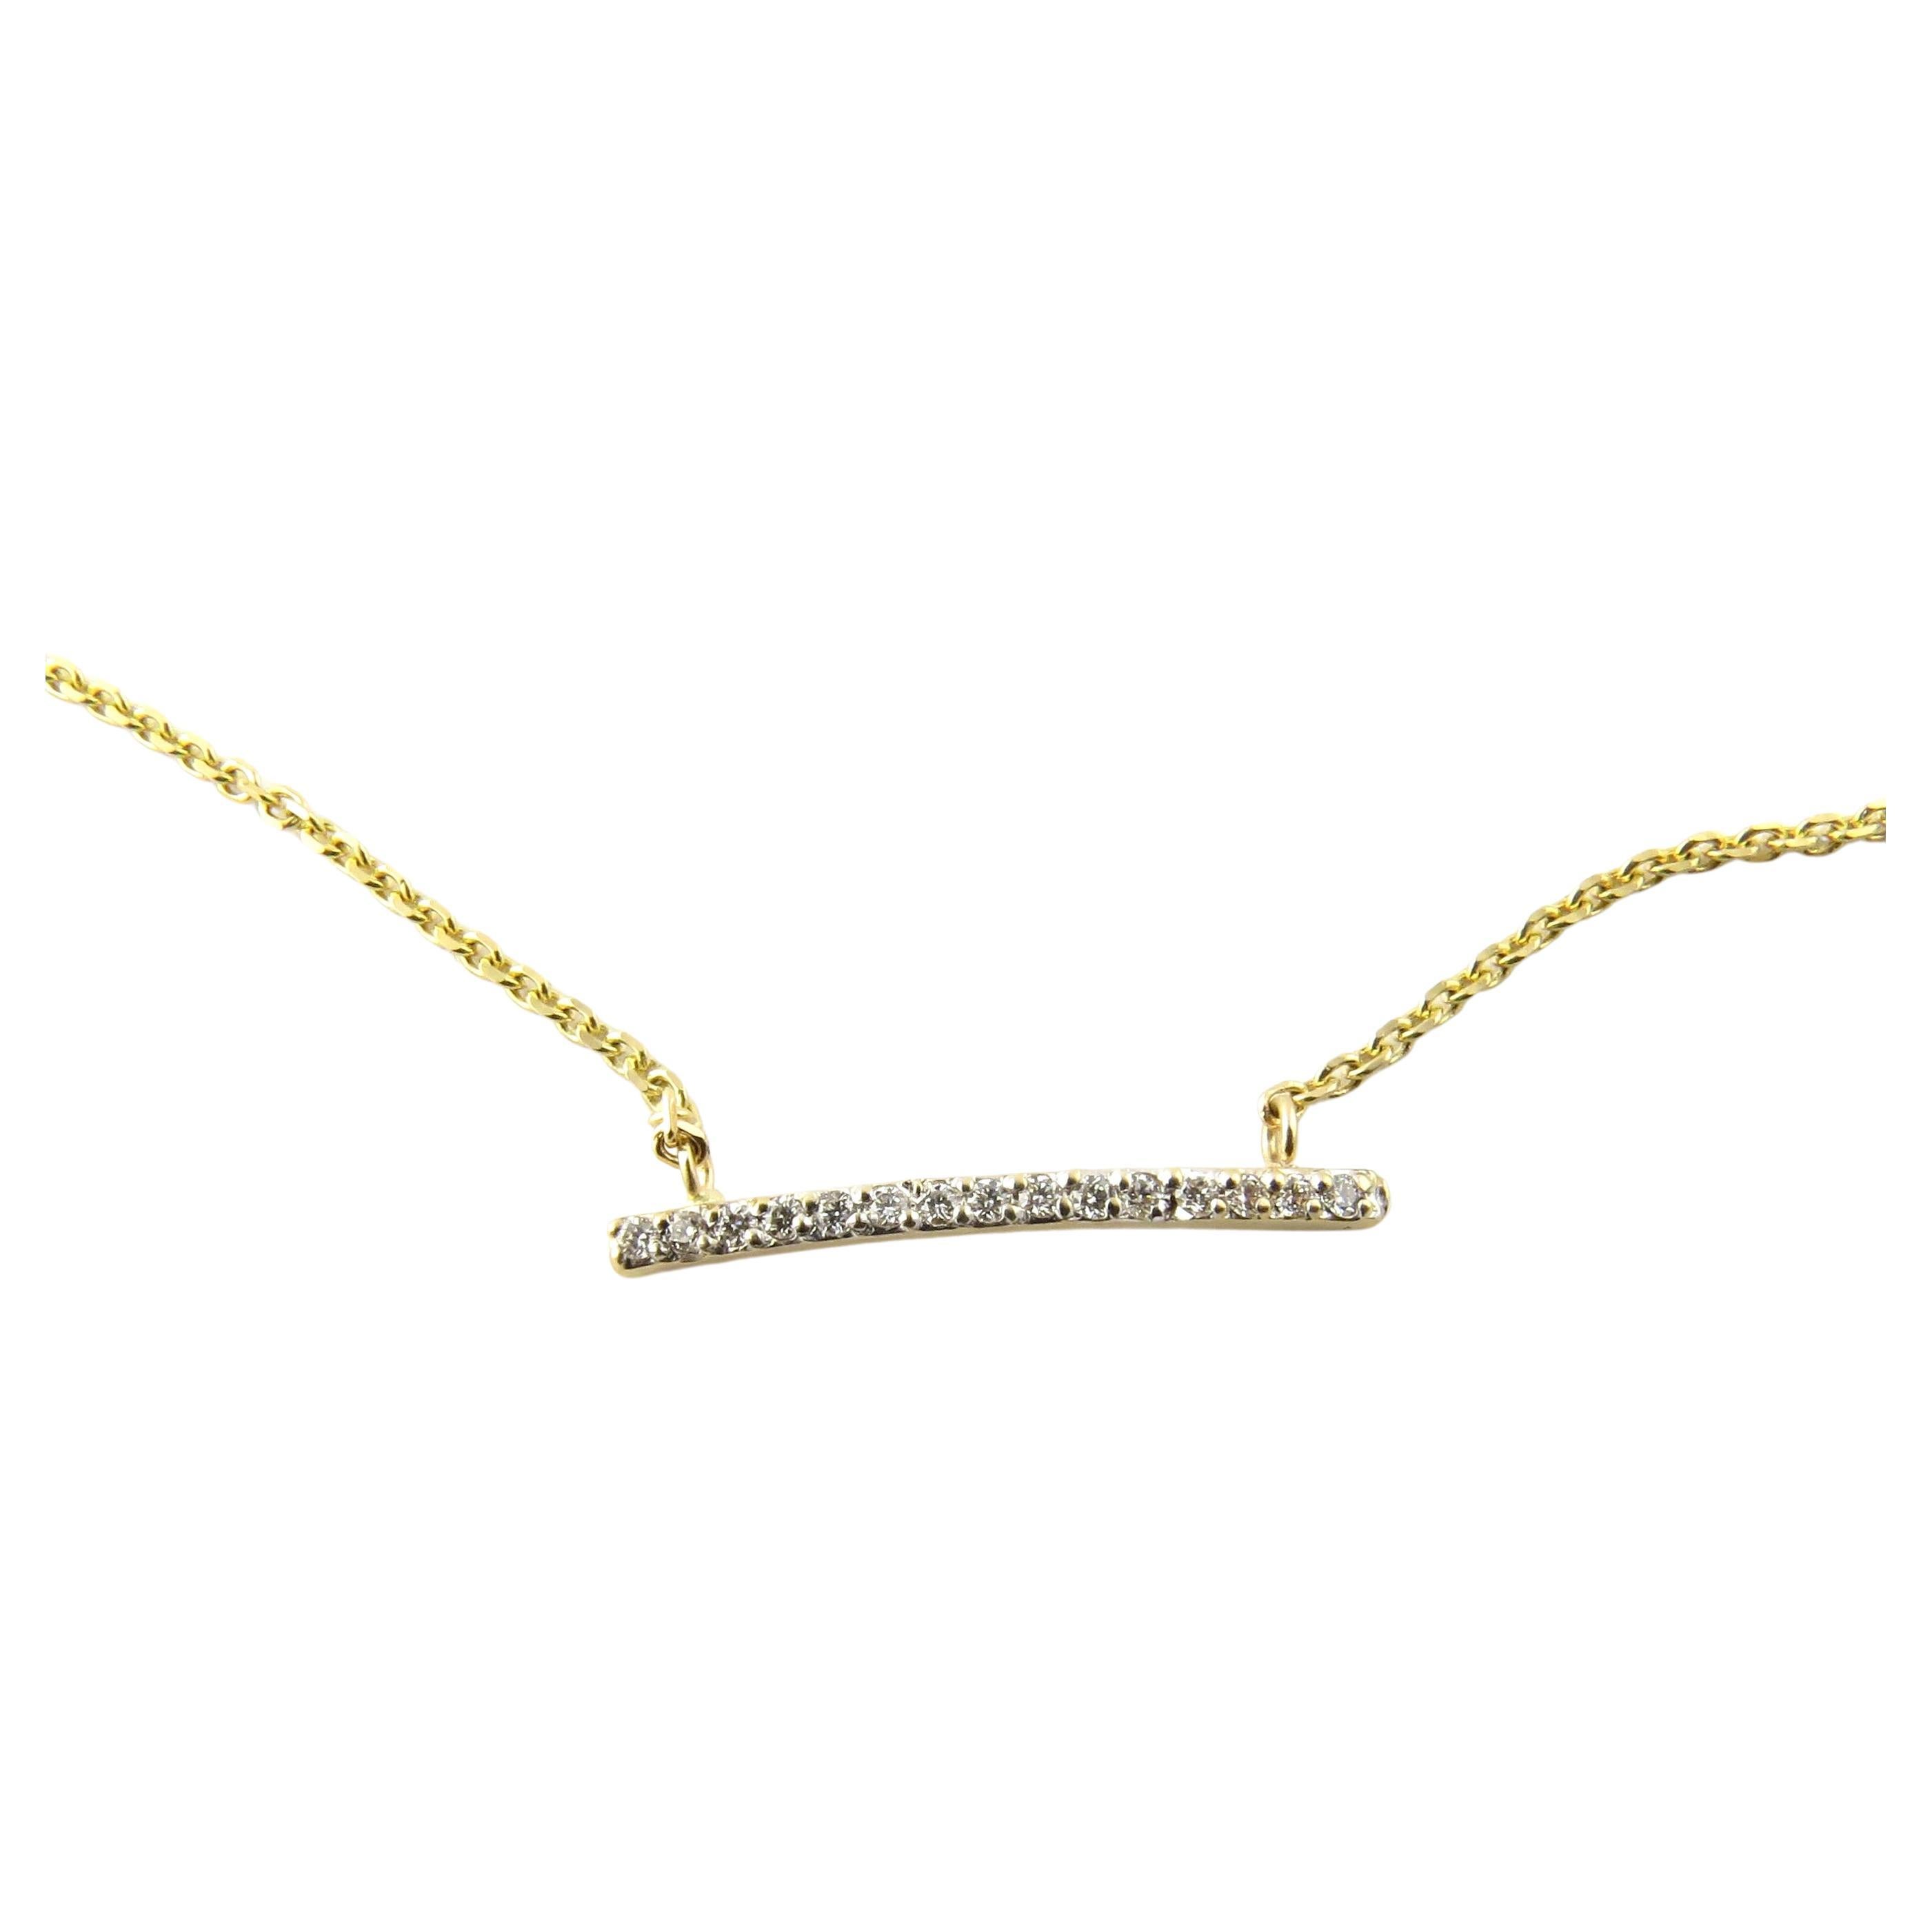 Vintage 14 Karat Yellow Gold Diamond Bar Necklace #16315 For Sale